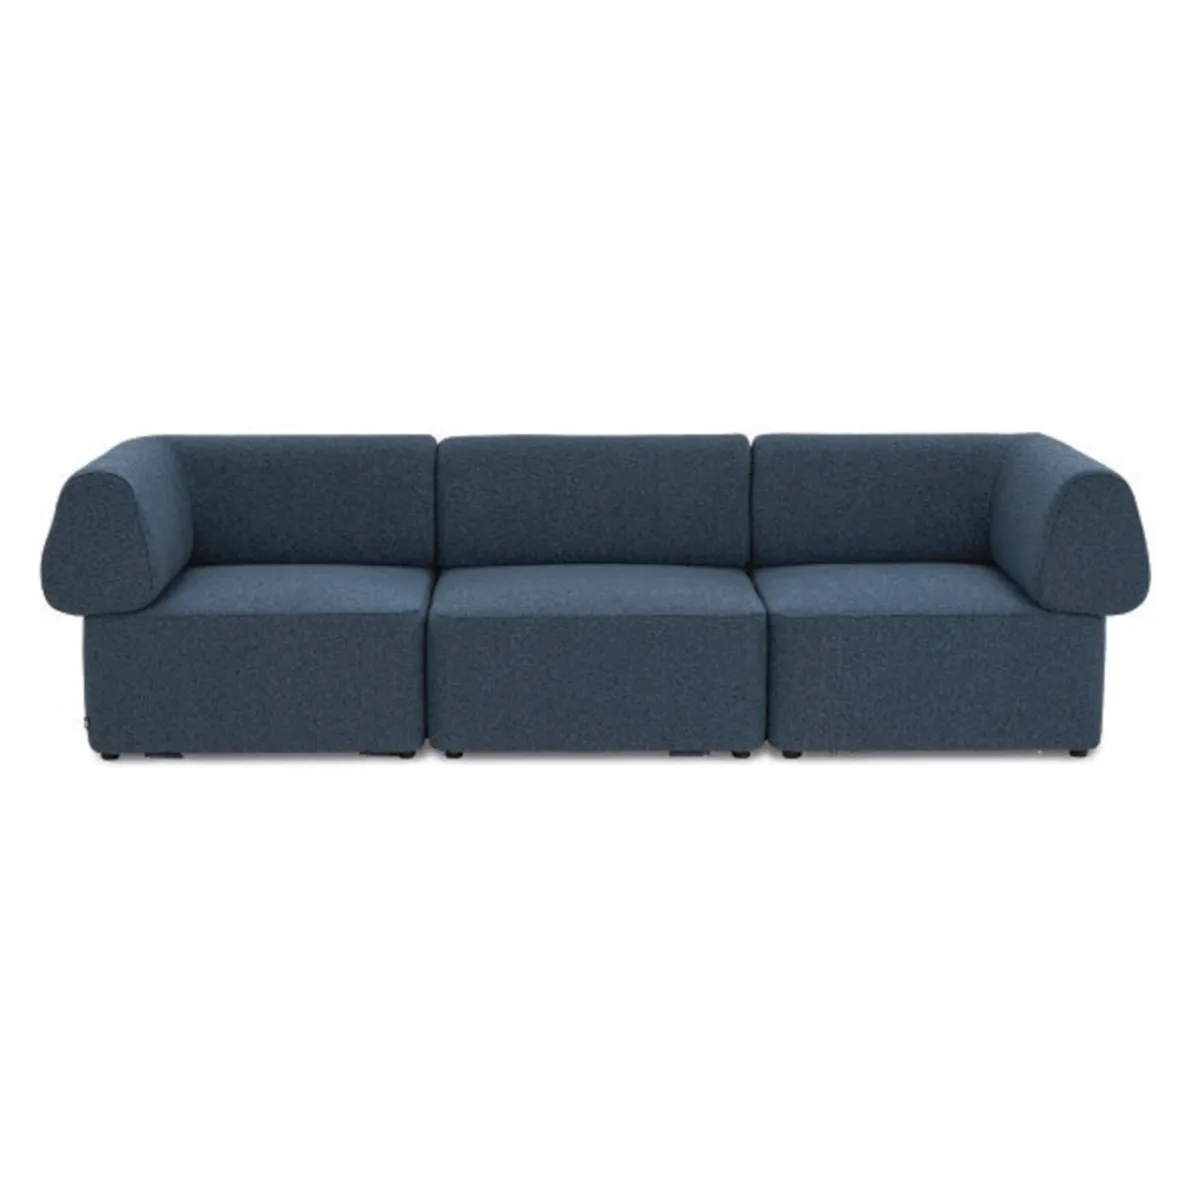 Corey modular sofa 1